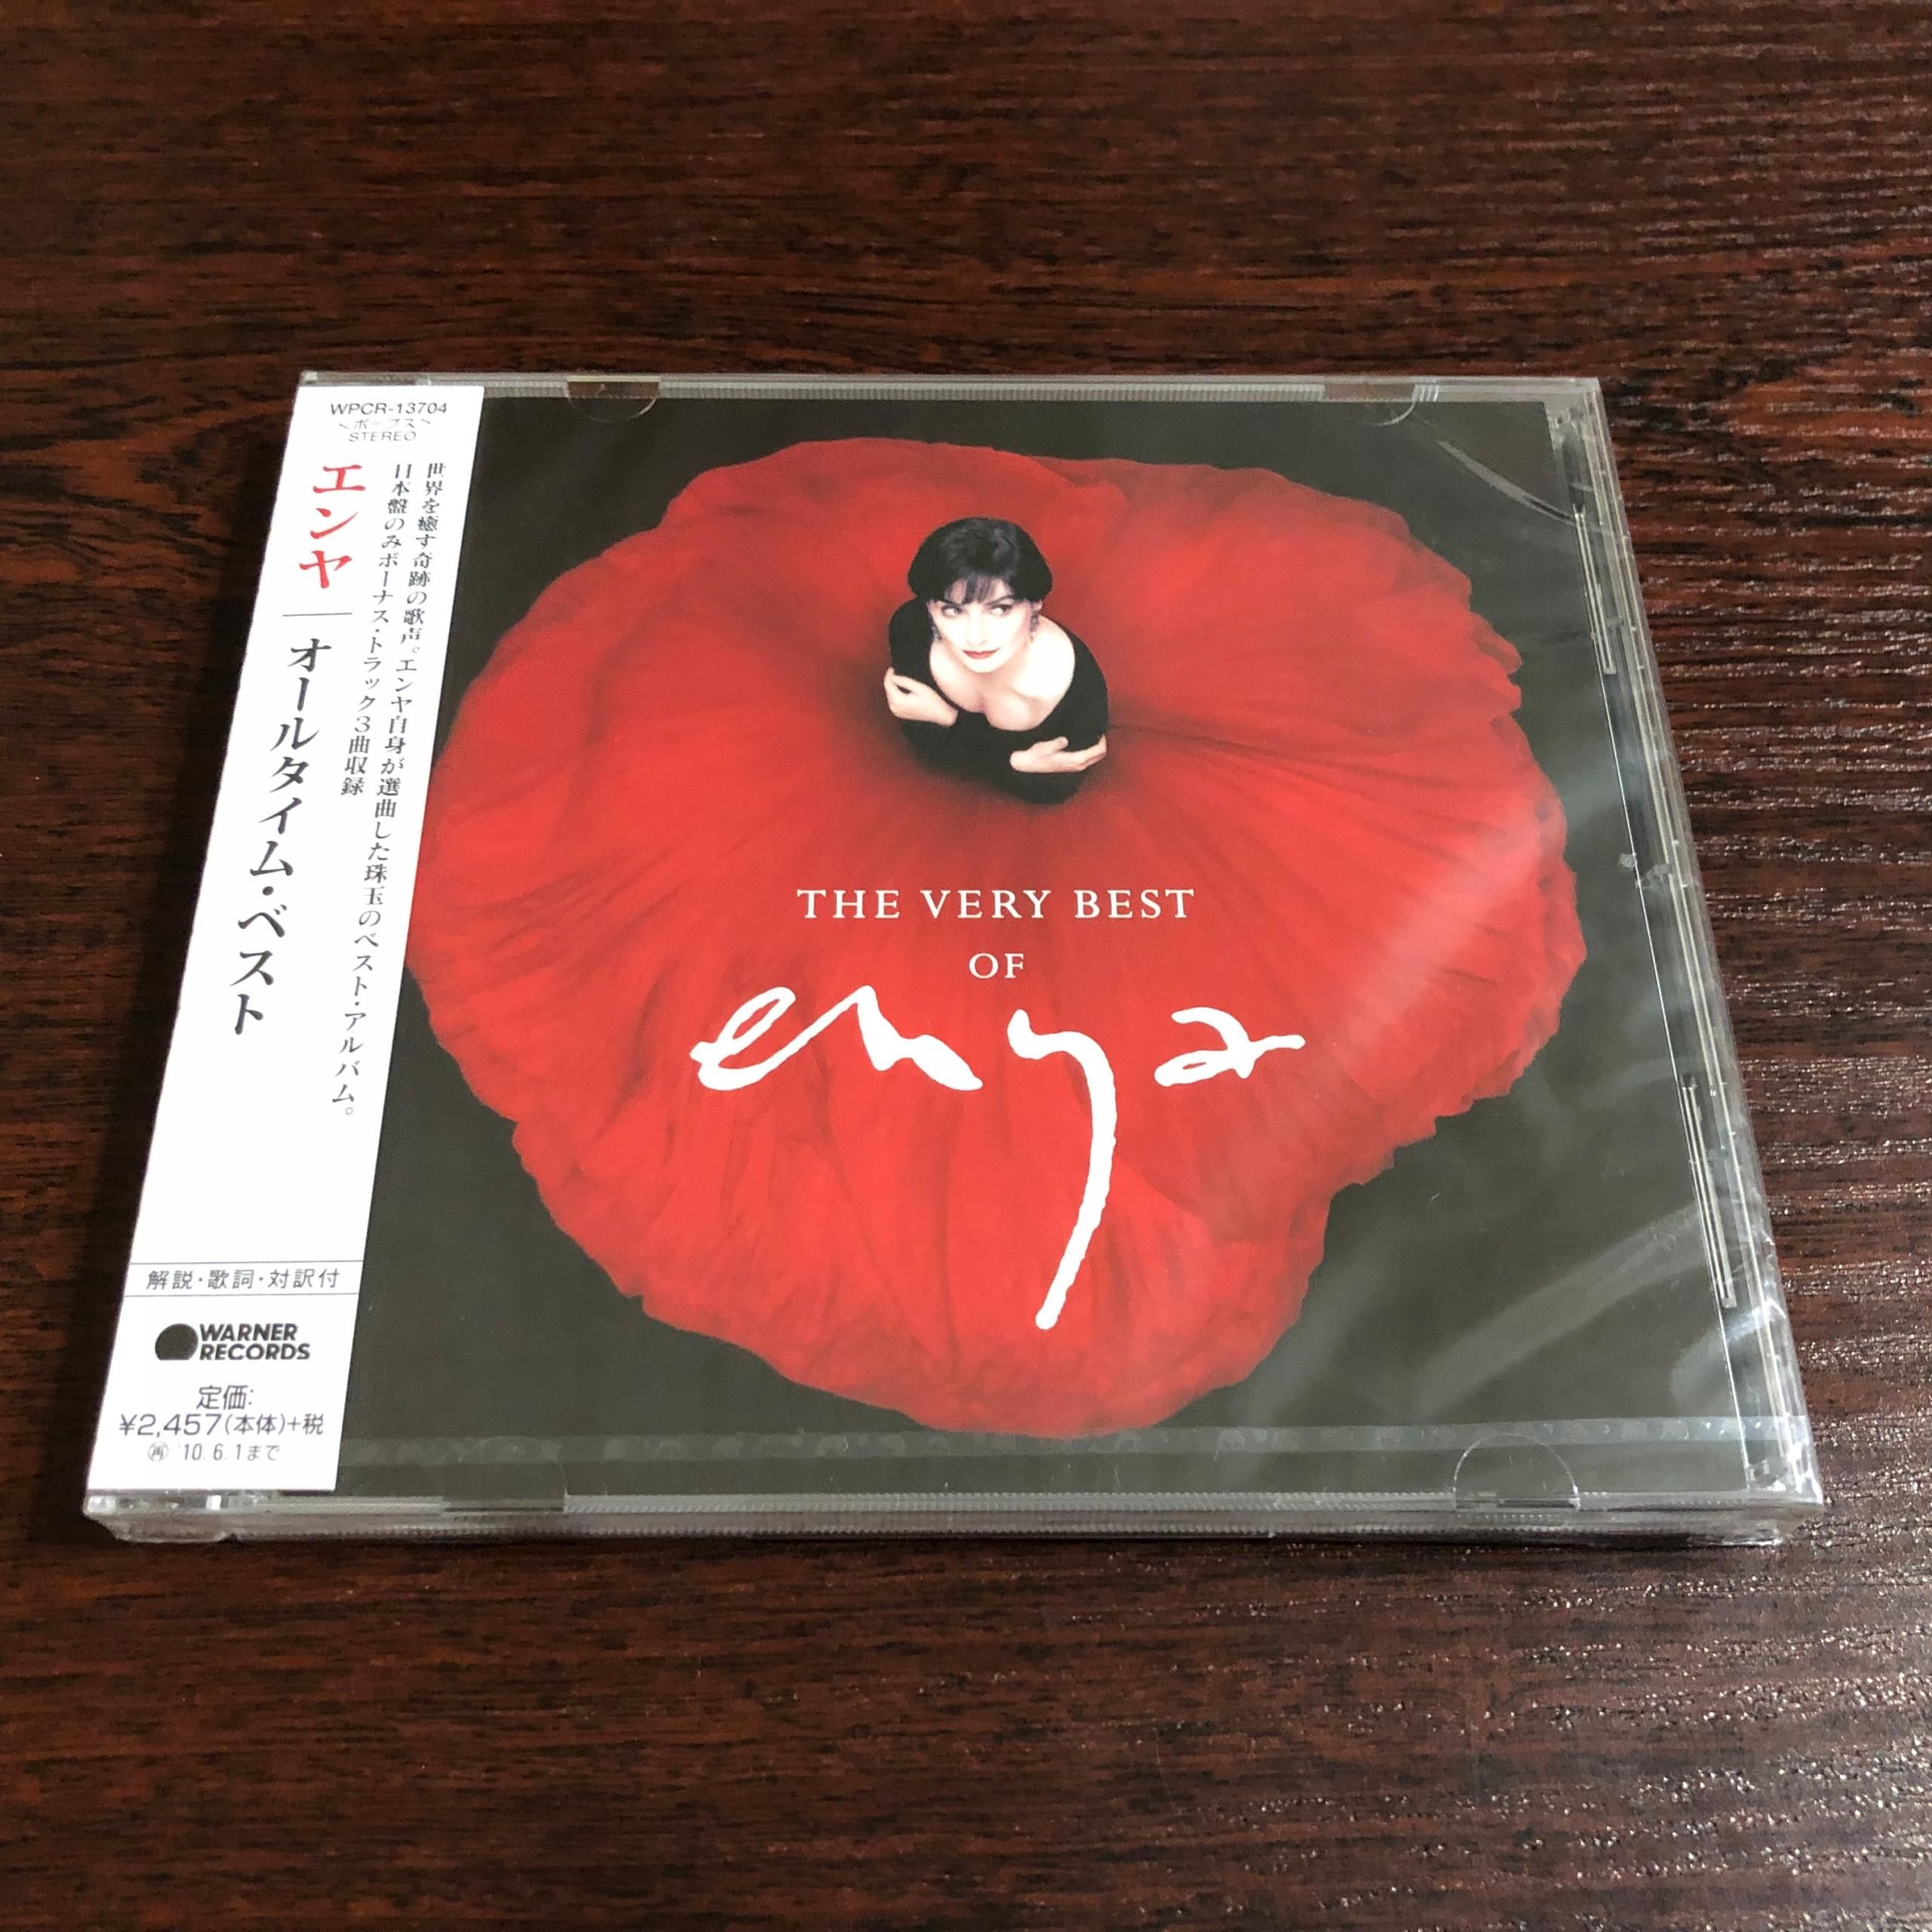 Płyta kompaktowa Enya The Very Best Of Enya Japan CD nowa - Ceny i